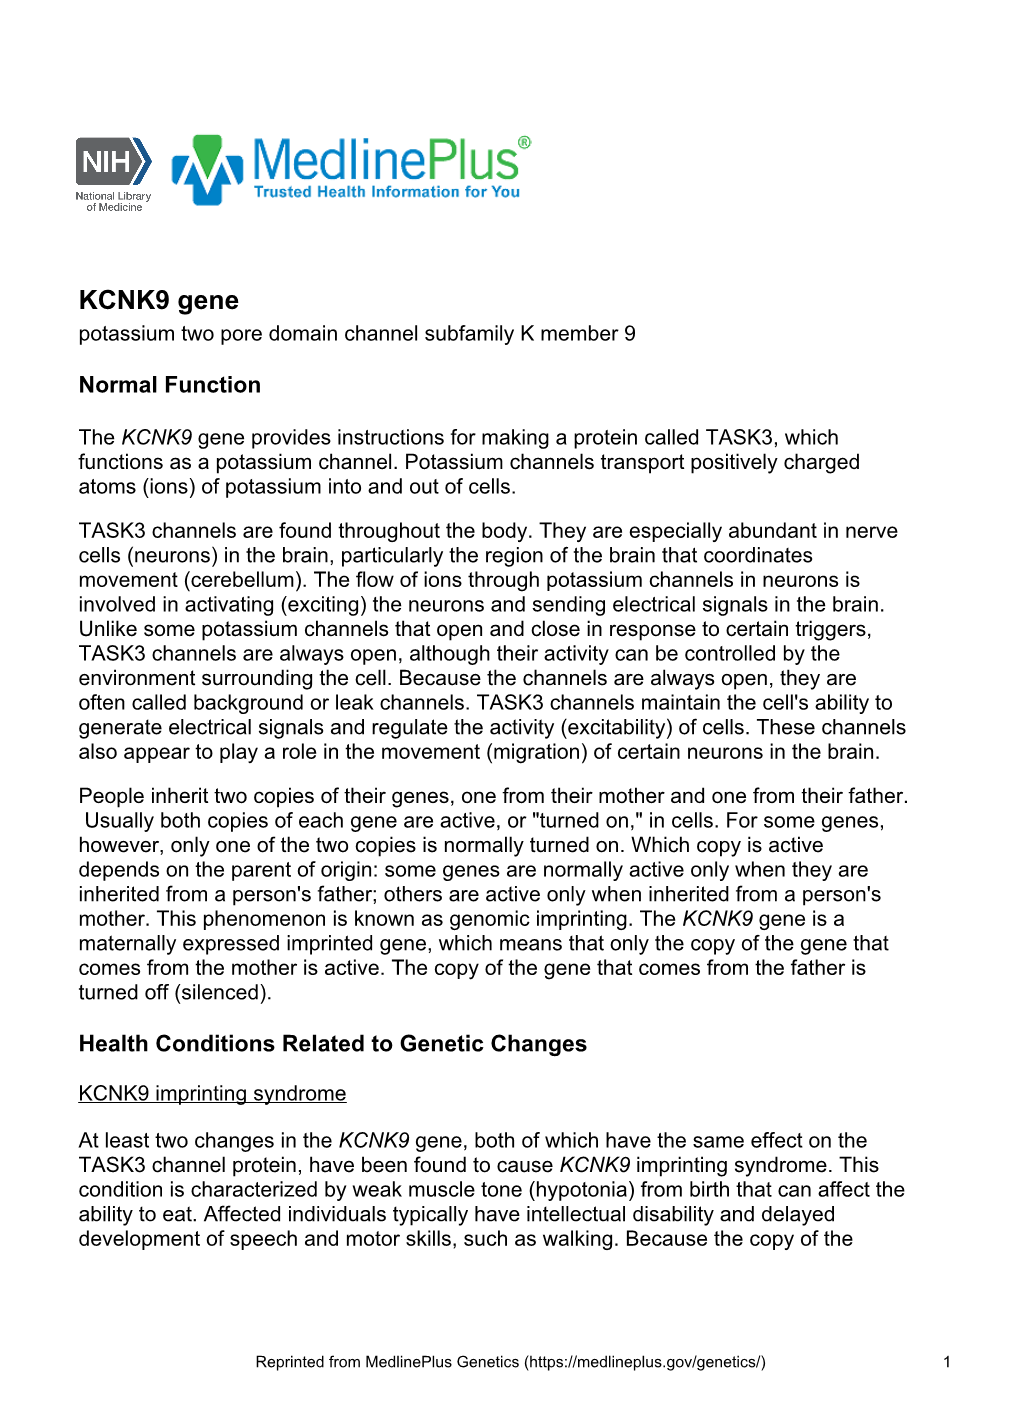 KCNK9 Gene Potassium Two Pore Domain Channel Subfamily K Member 9